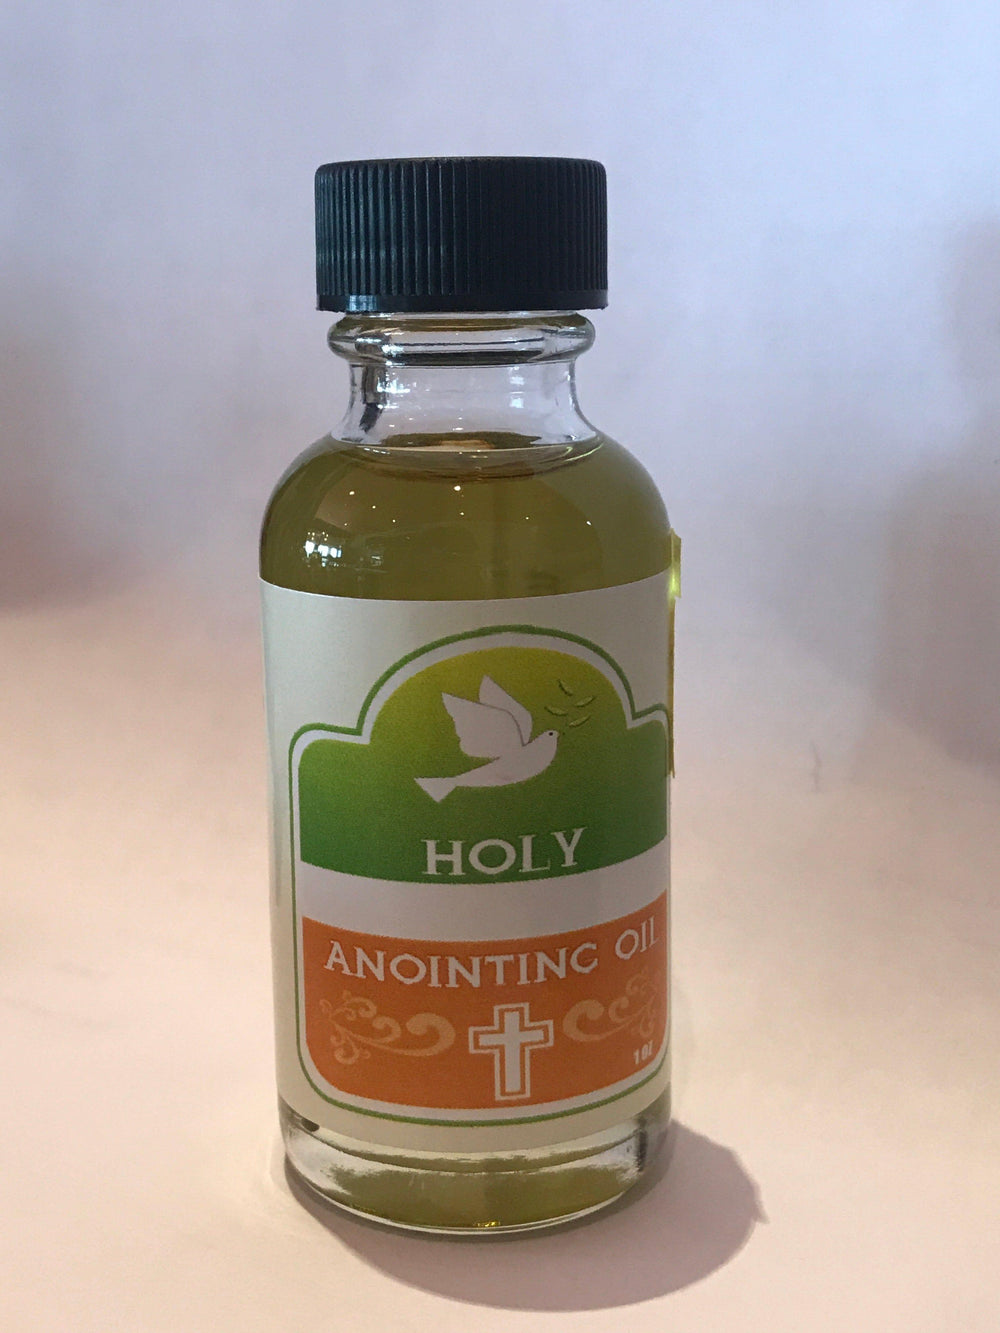 Holy Anointing Oil 1 oz - Pura Vida Books